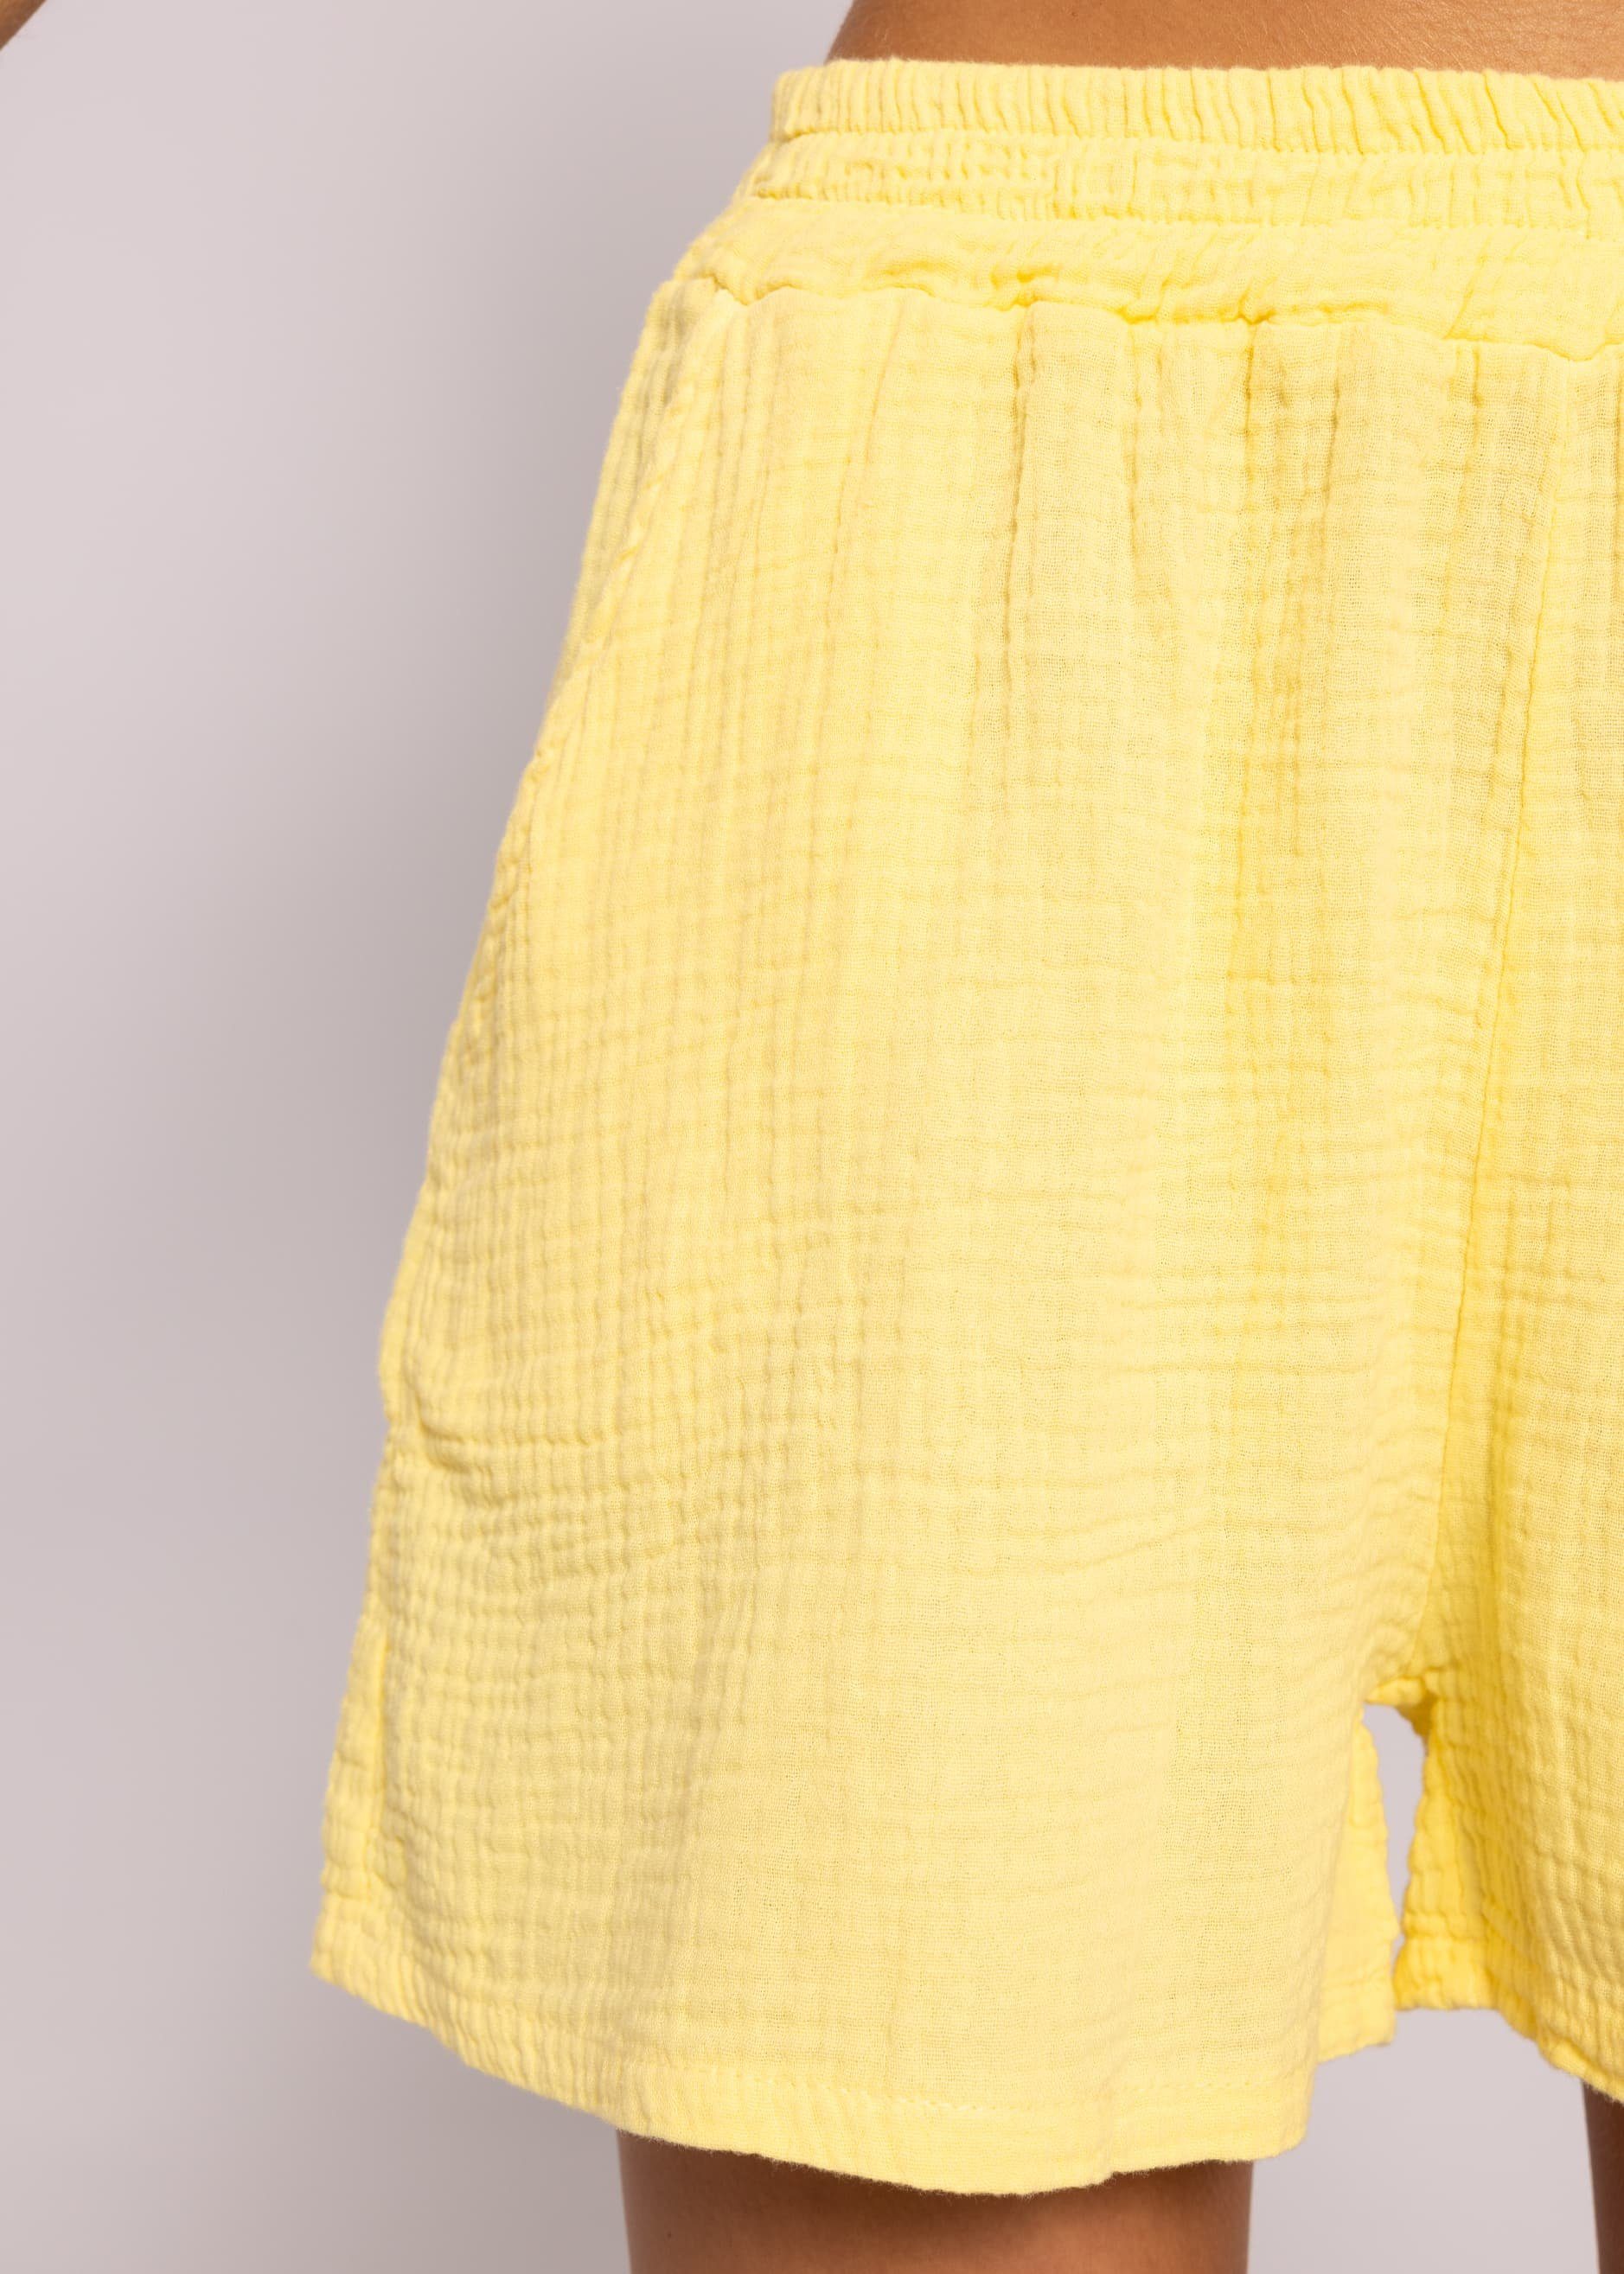 Made Sommer Gelb 100 Hose Musselin leicht, Damen Kurz Shorts Baumwolle SASSYCLASSY Italy atmungsaktiv, % sehr (Musselin), in